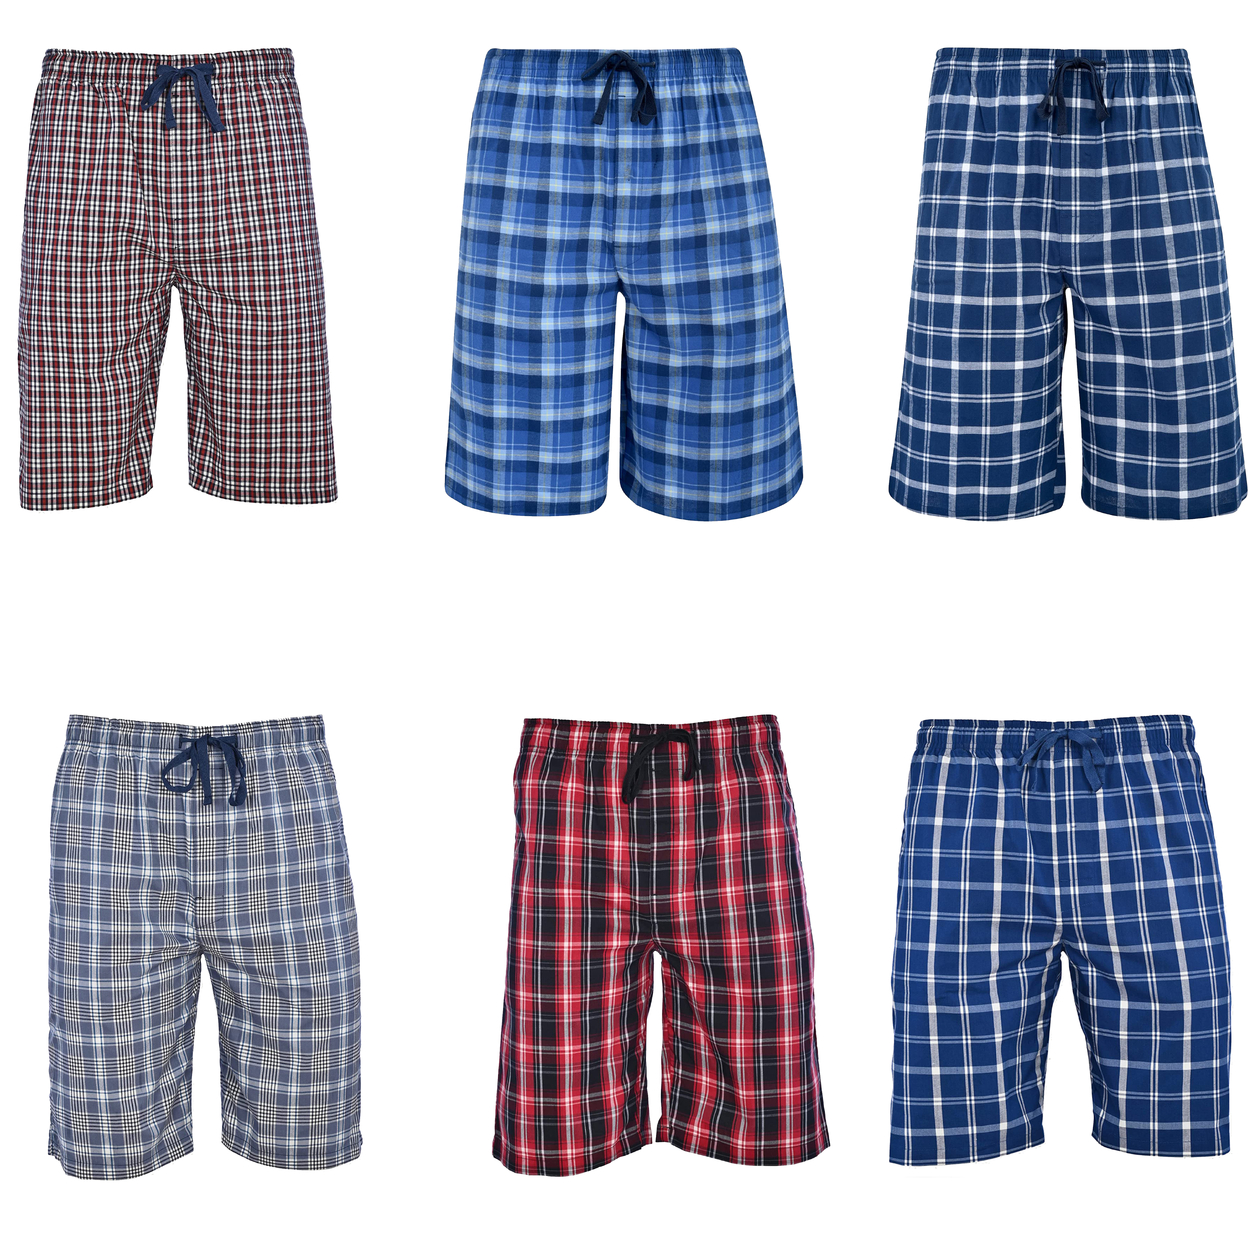 2-Pack: Men's Ultra Soft Plaid Lounge Pajama Sleep Wear Shorts - Black & Grey, X-large